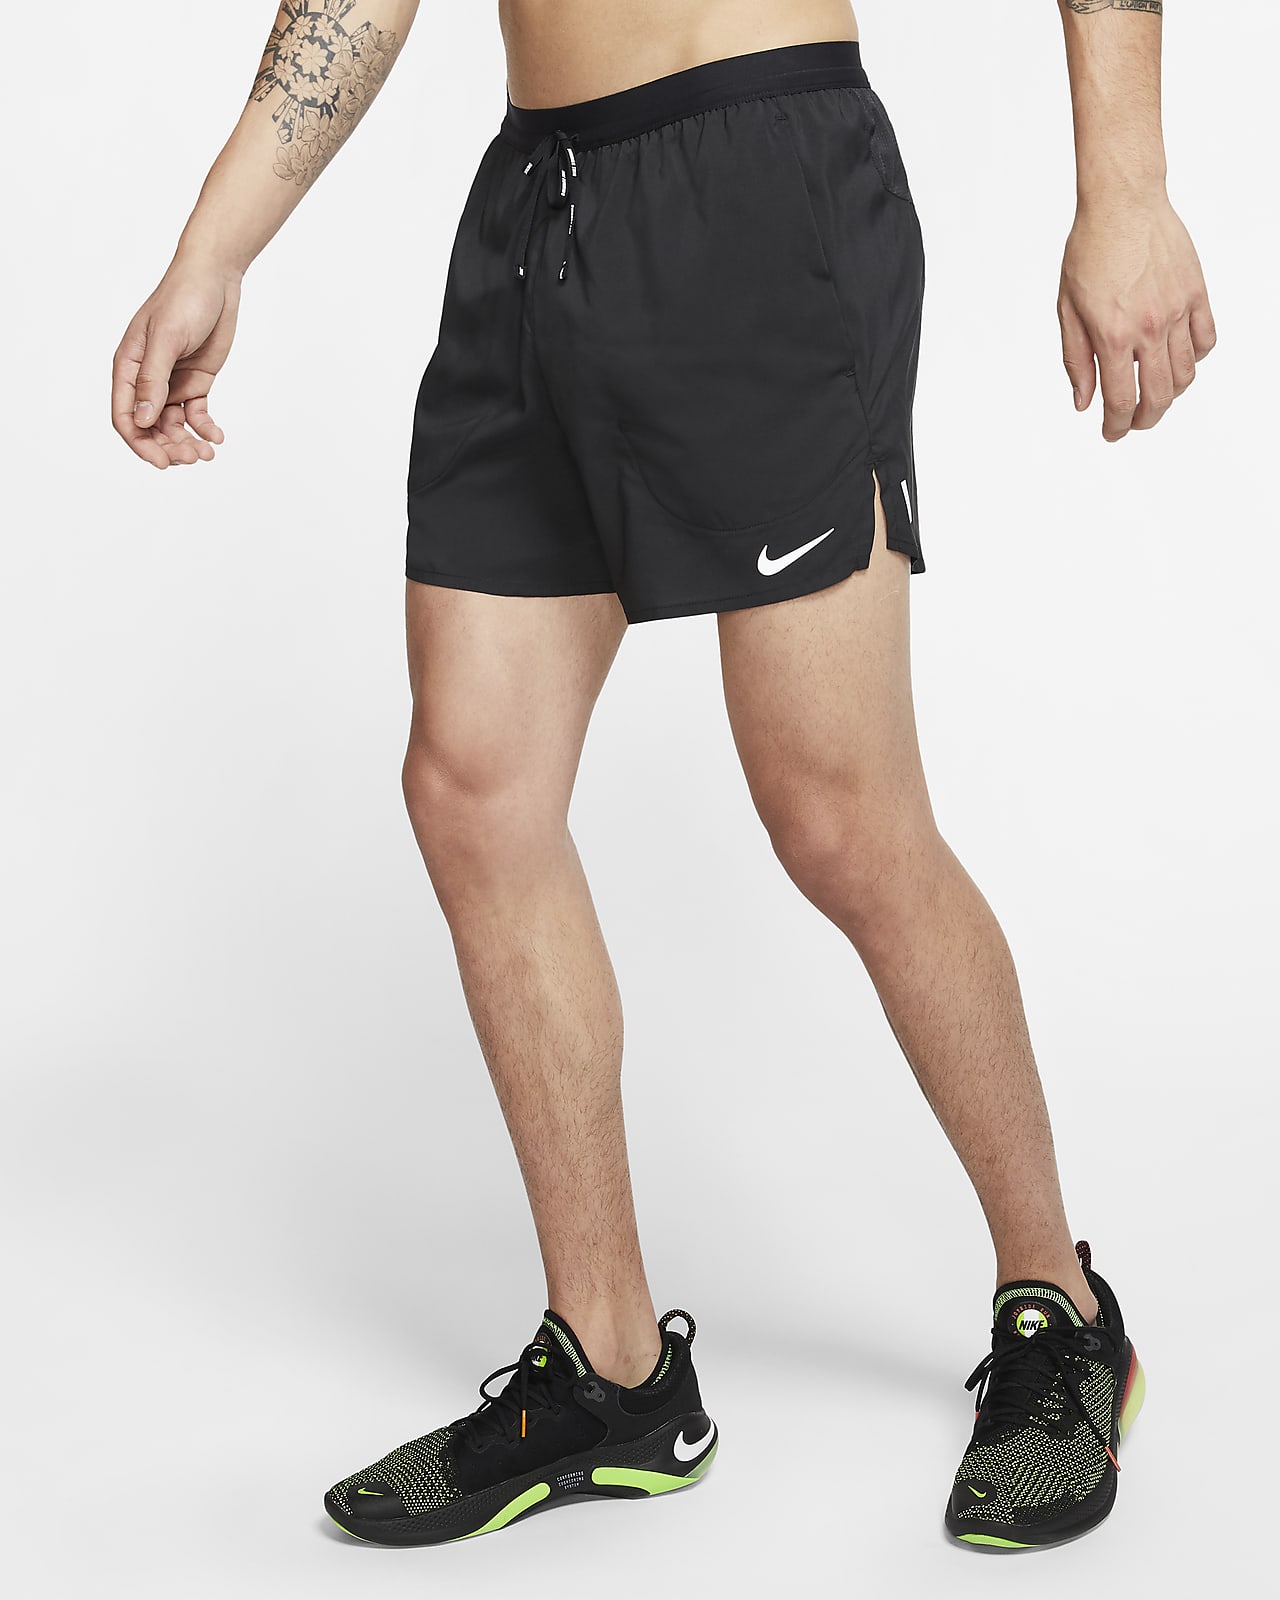 Brief Running Shorts. Nike JP